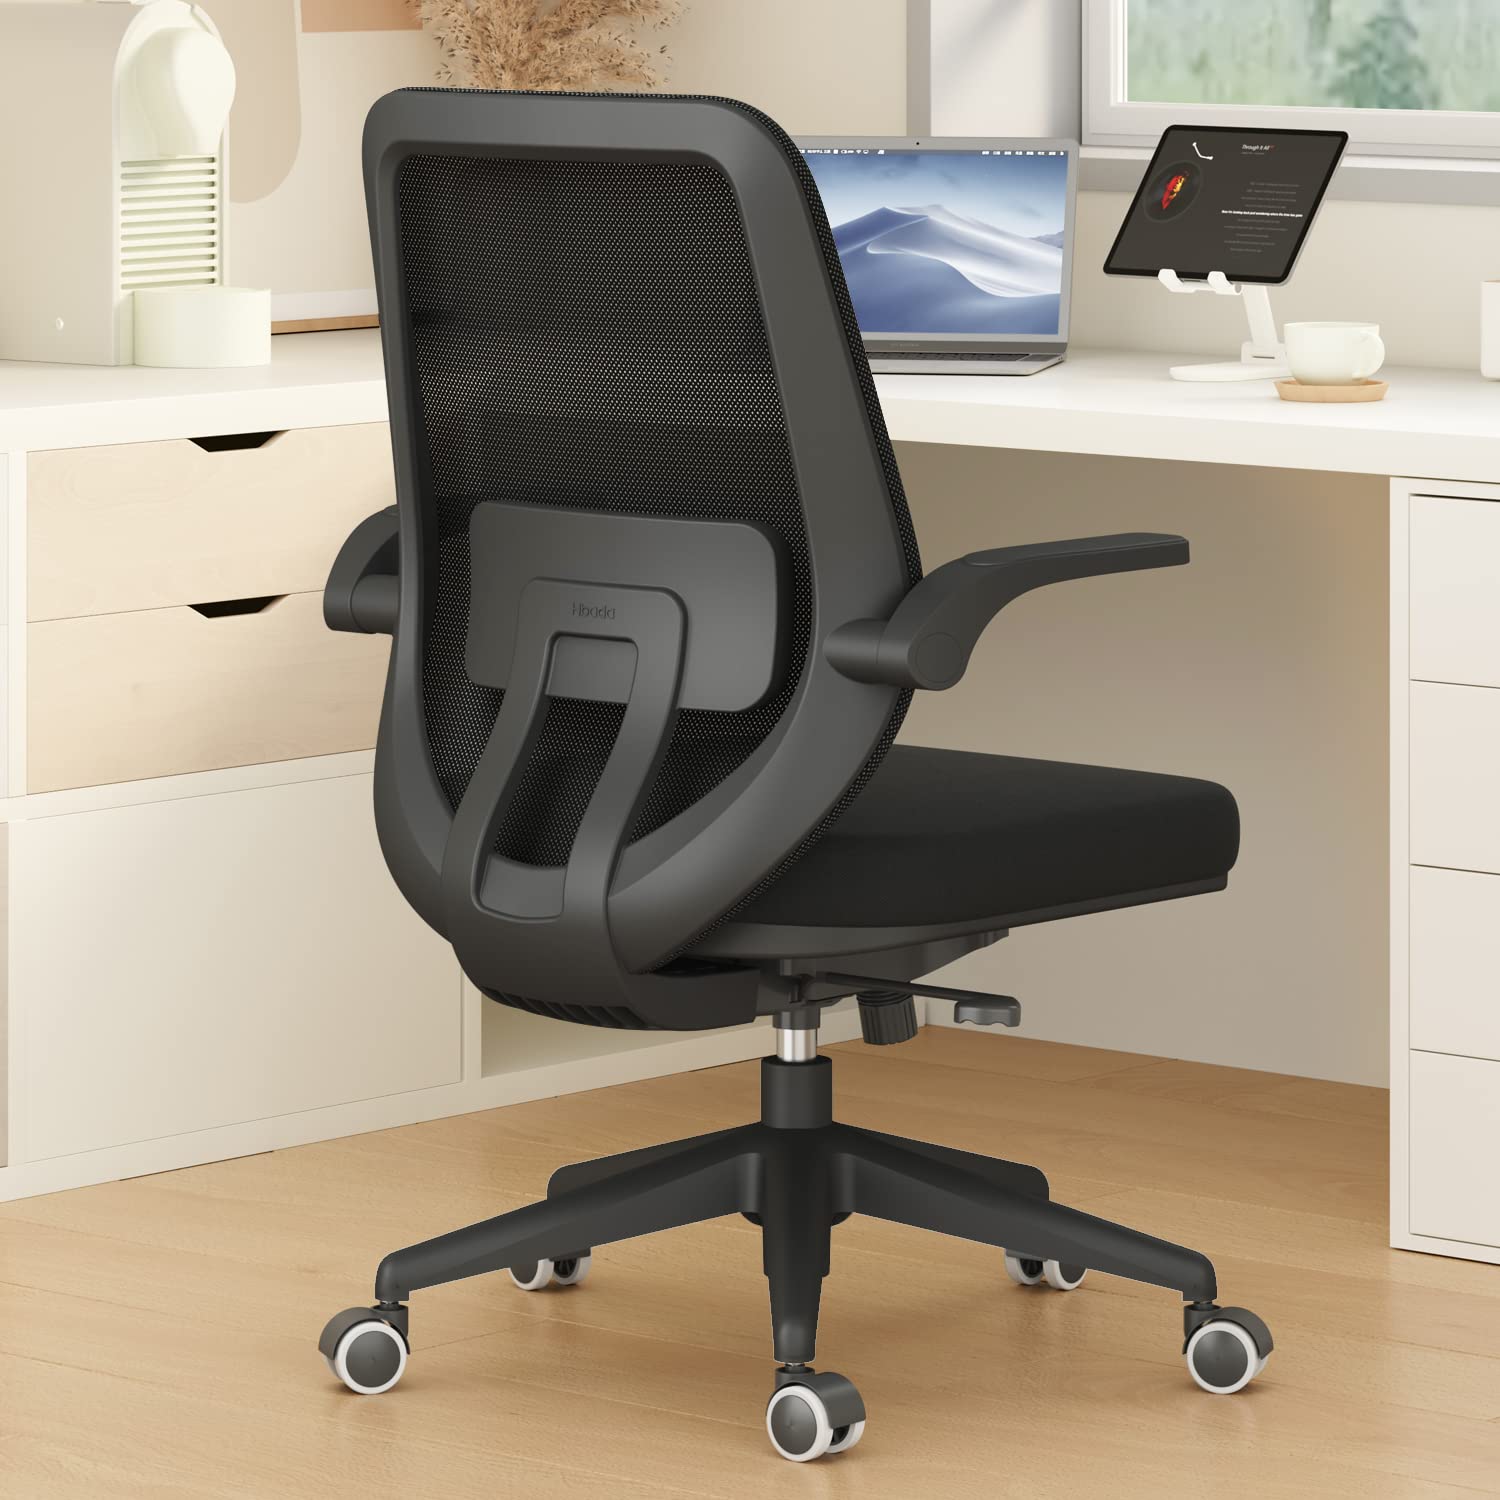 Hbada 플립 업 팔과 높이 조절이 가능한 사무실 의자 작업용 책상 의자 회전 홈 컴포트 의자